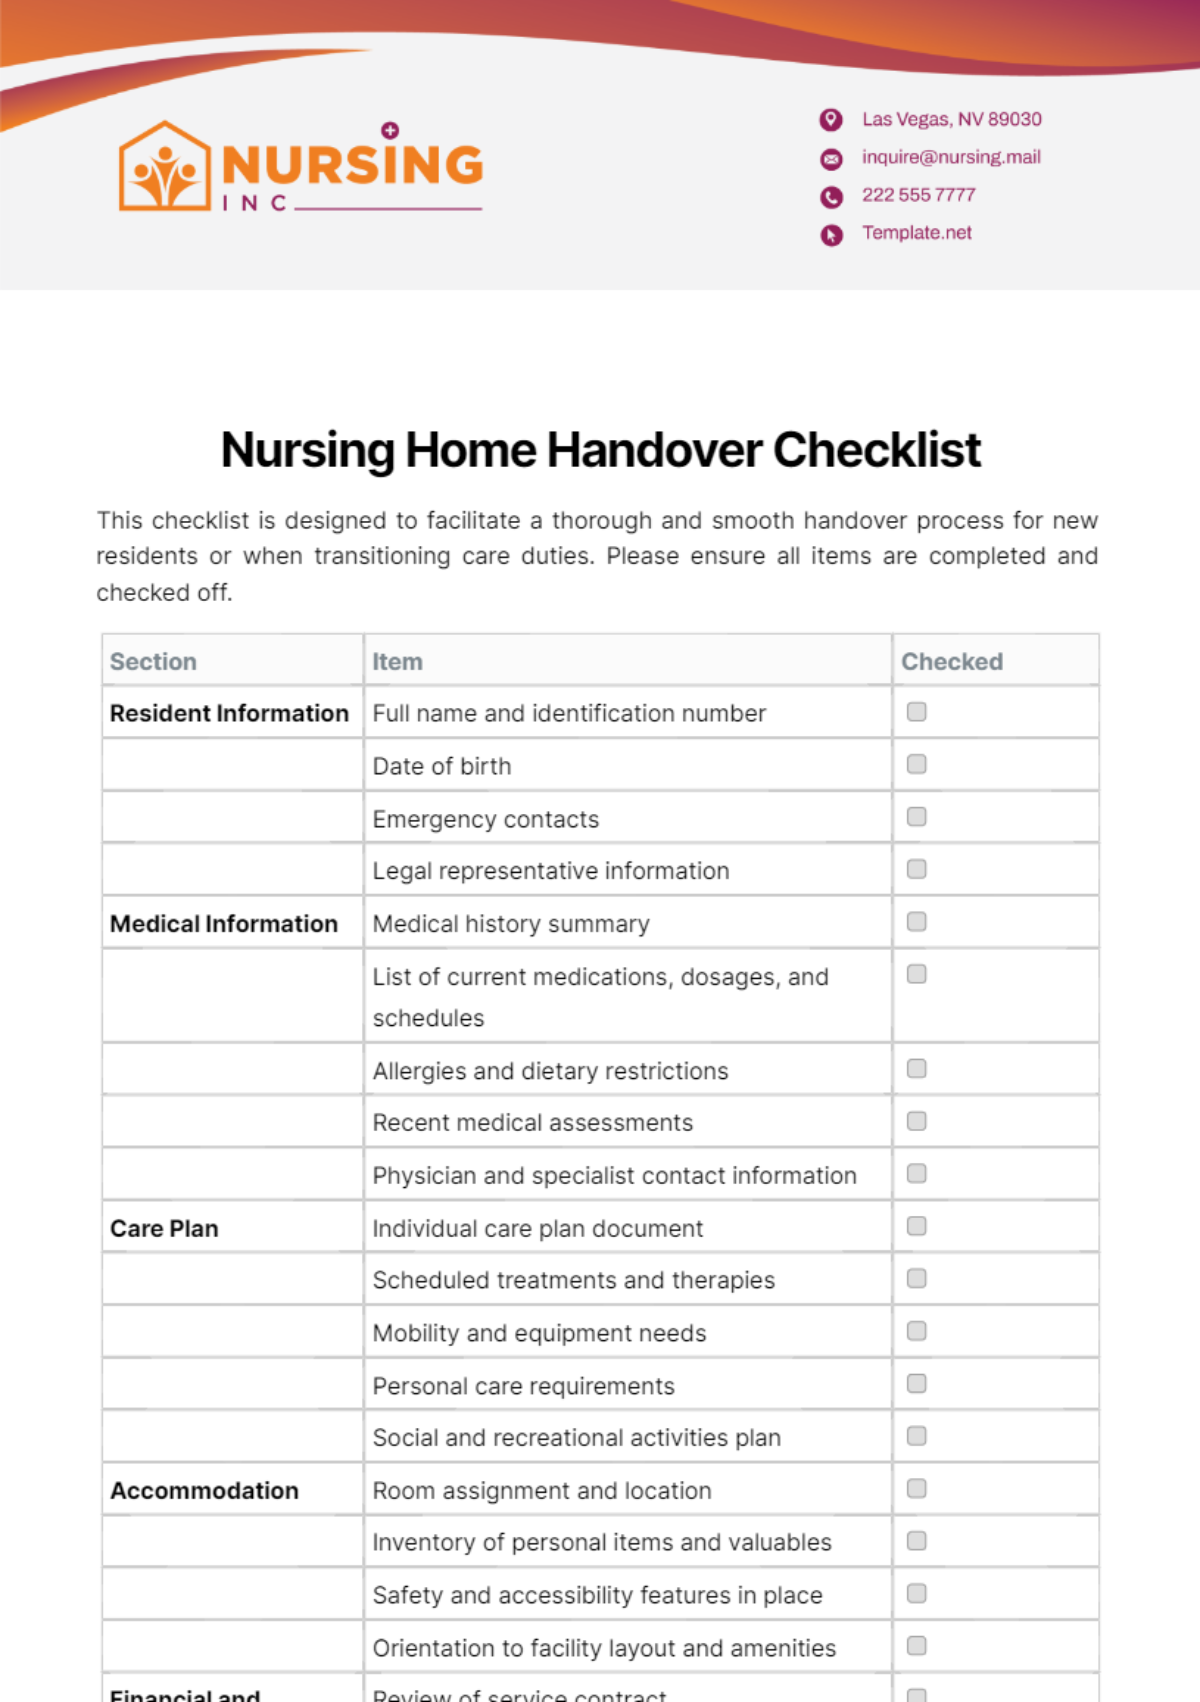 Nursing Home Handover Checklist Template